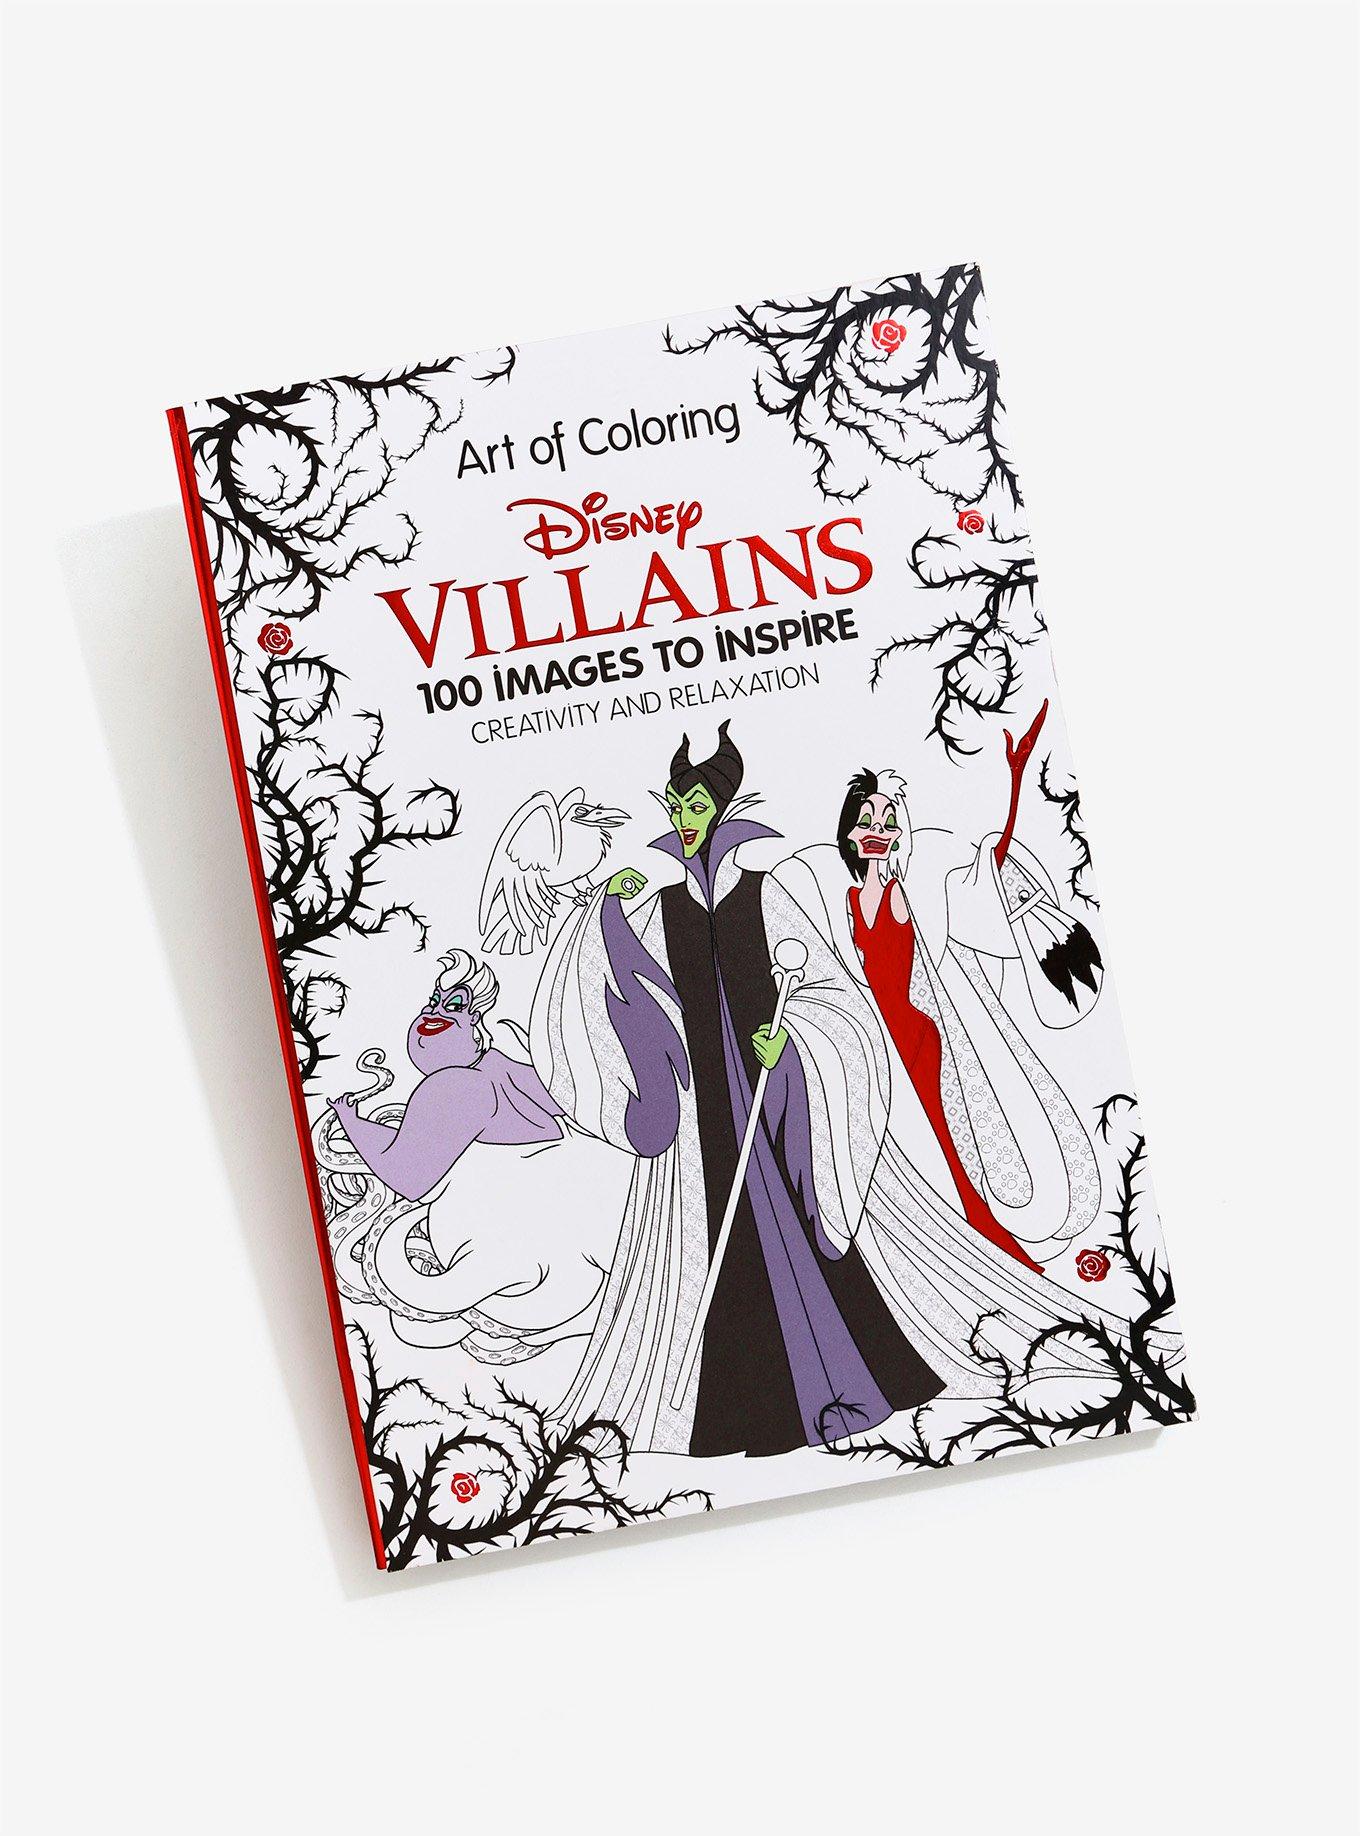 Disney Villains: The Art of Coloring Book